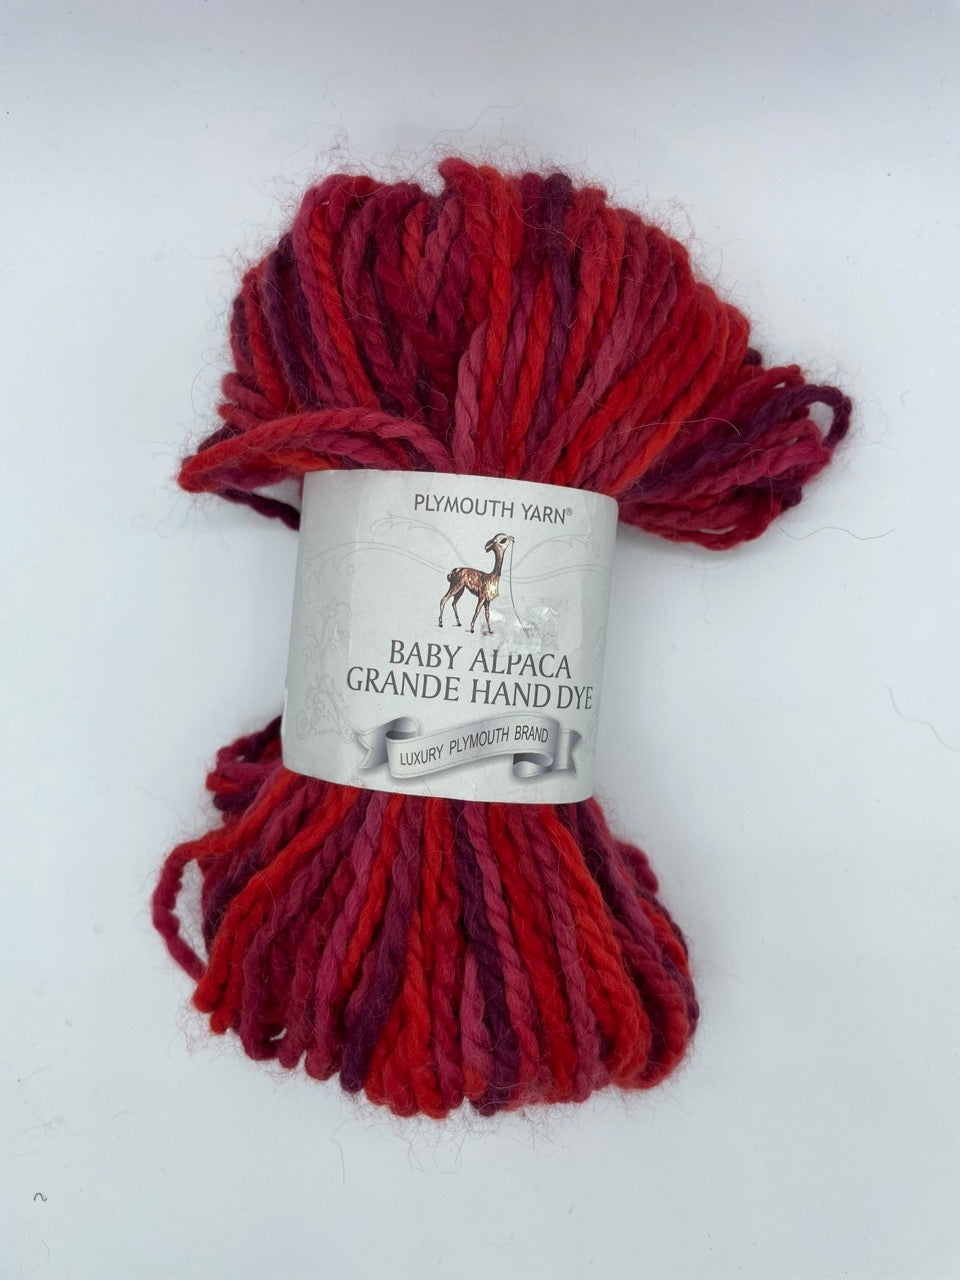 Plymouth Yarn Baby Alpaca Grande Hand Dye